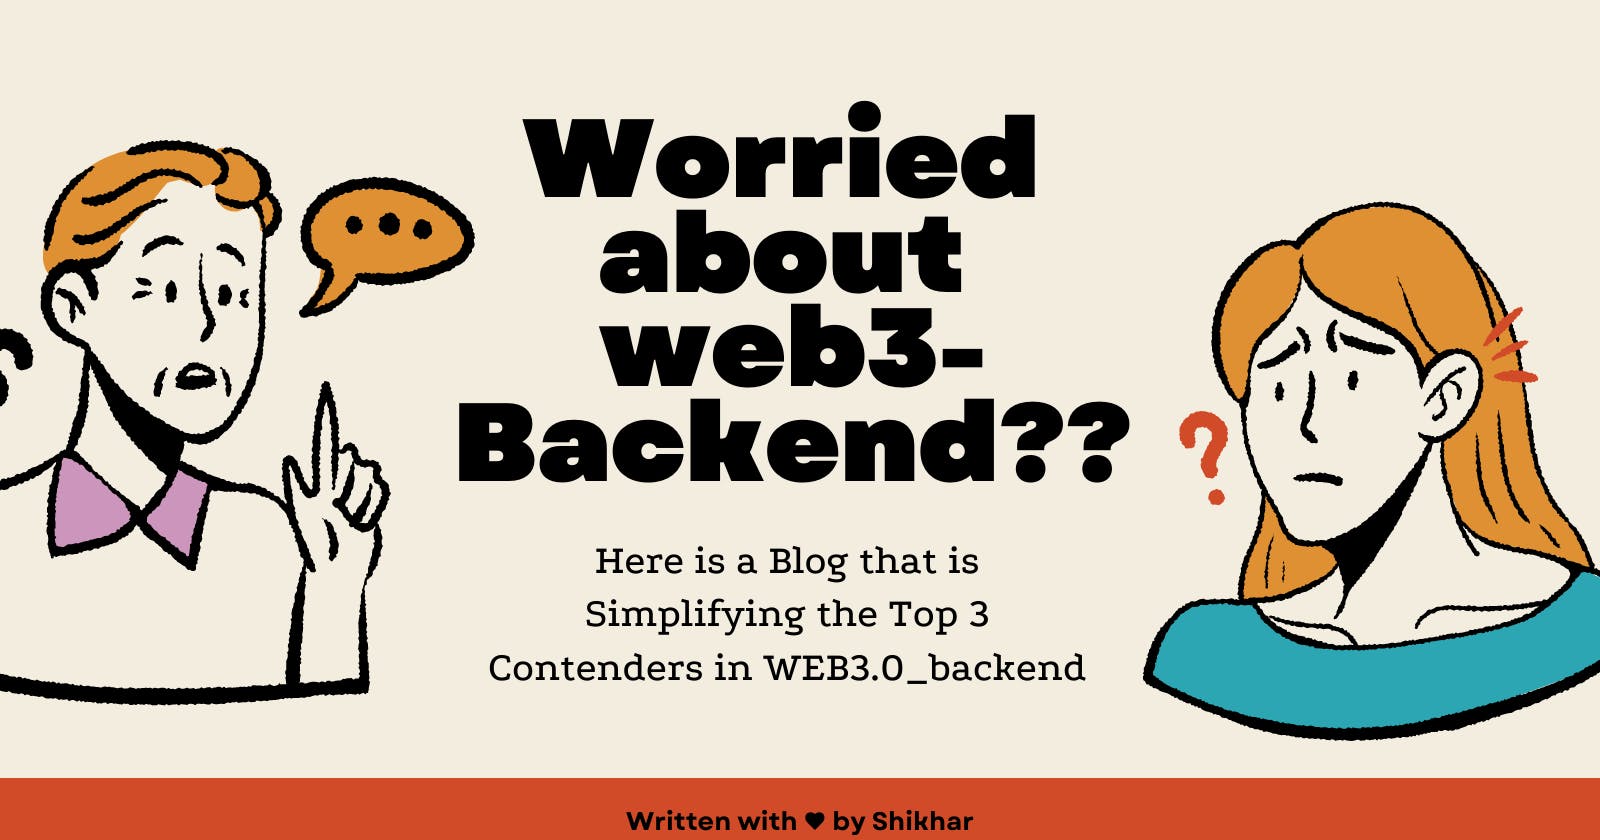 Top 3 contenders in "Web3-Backend" Simplified.